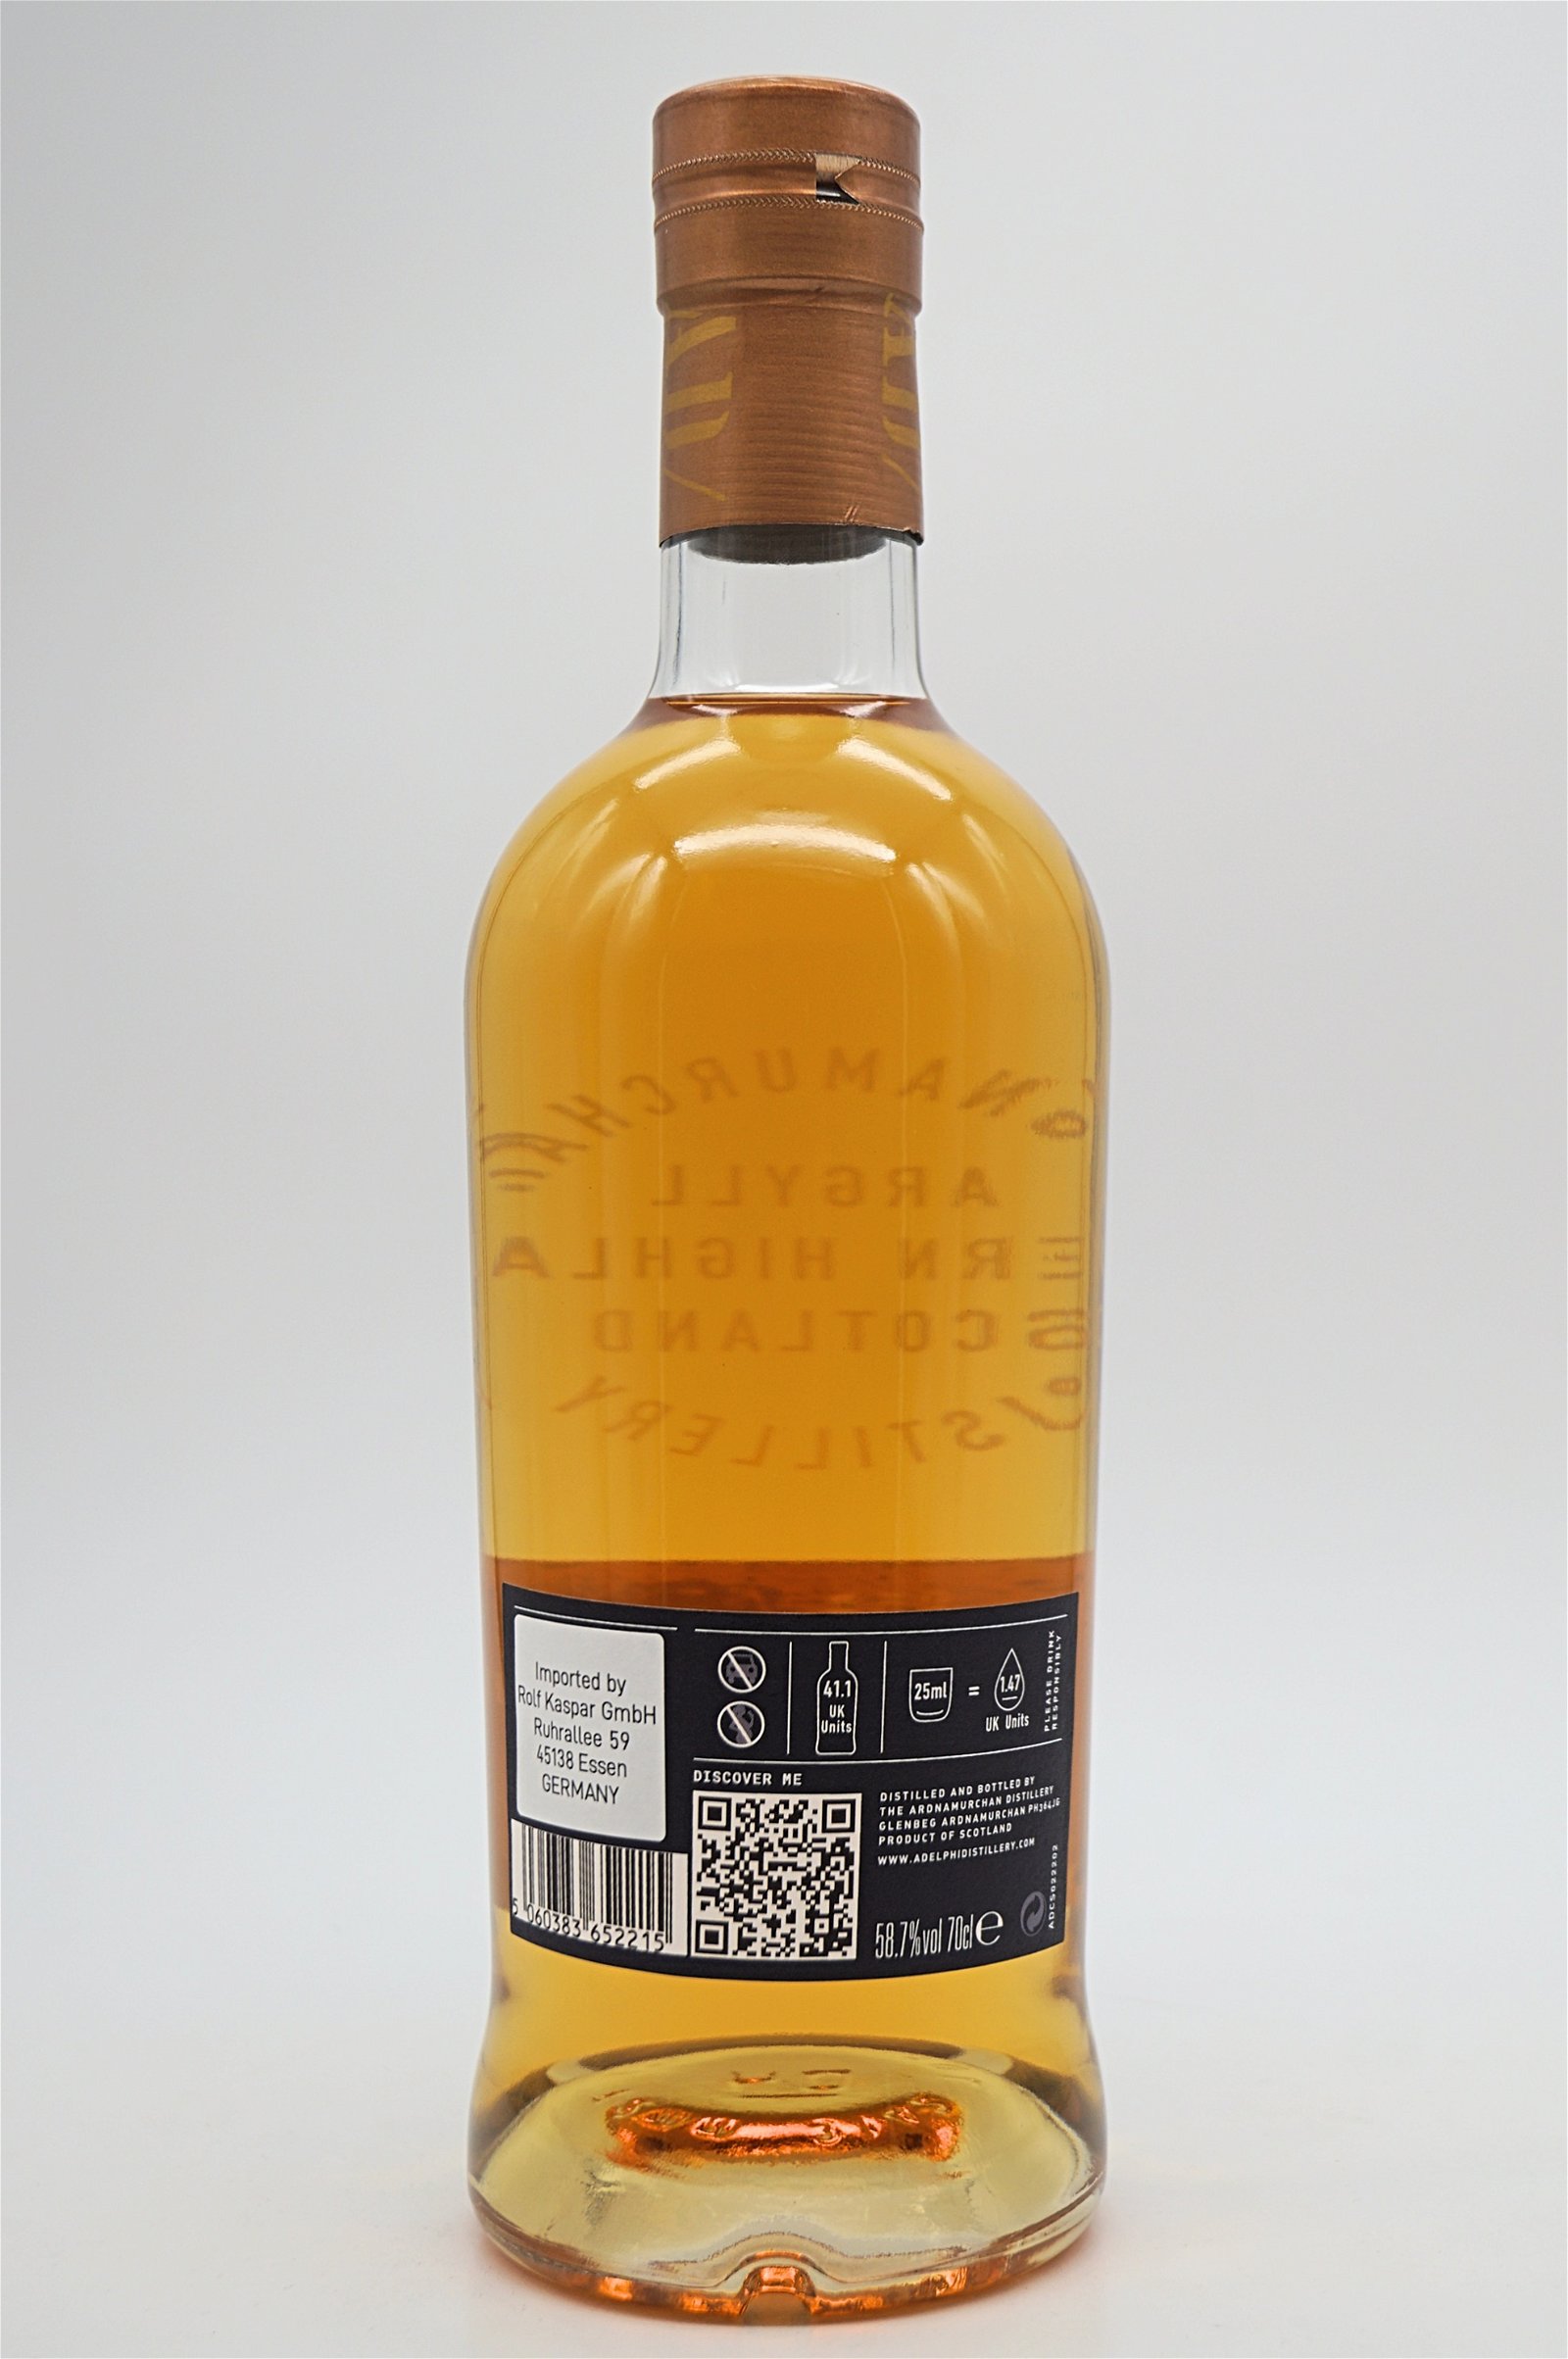 Ardnamurchan AD/02.22 Cask Strength Highland Single Malt Scotch Whisky